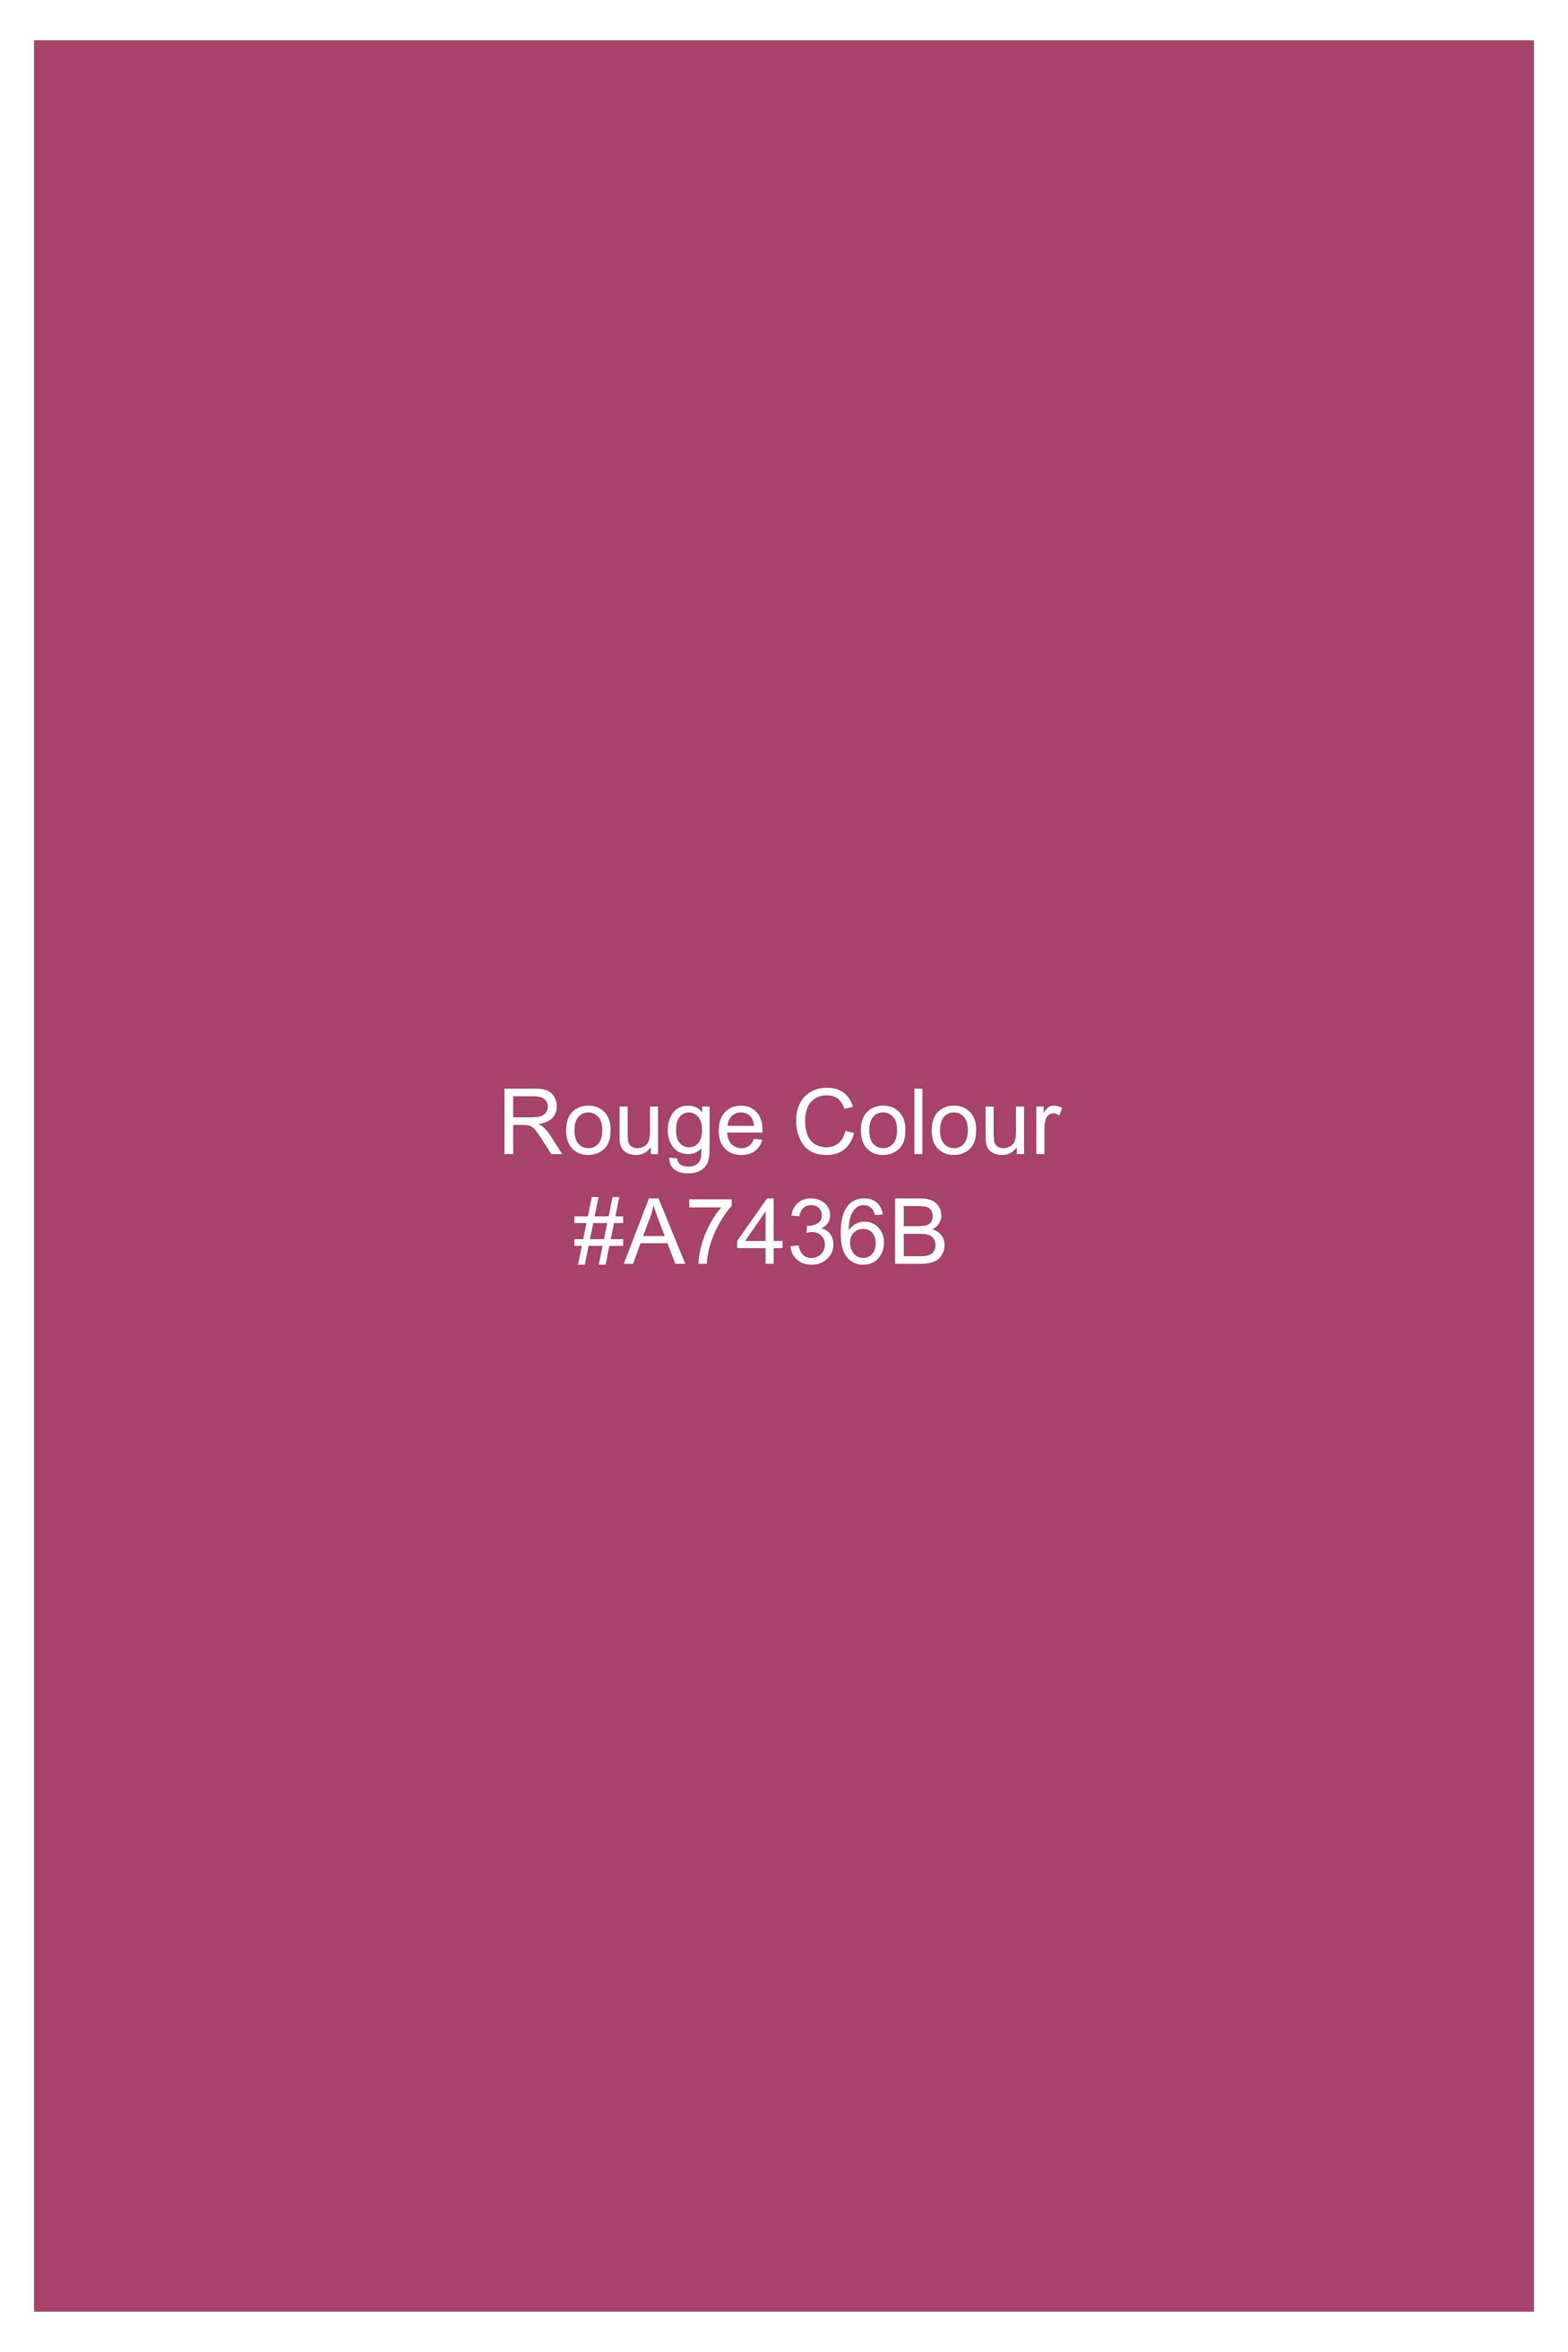 Rouge Pink Hotfix Subtle Sheen Super Soft Premium Cotton Designer Shirt 12033-MN-NP-PP-38, 12033-MN-NP-PP-H-38, 12033-MN-NP-PP-39, 12033-MN-NP-PP-H-39, 12033-MN-NP-PP-40, 12033-MN-NP-PP-H-40, 12033-MN-NP-PP-42, 12033-MN-NP-PP-H-42, 12033-MN-NP-PP-44, 12033-MN-NP-PP-H-44, 12033-MN-NP-PP-46, 12033-MN-NP-PP-H-46, 12033-MN-NP-PP-48, 12033-MN-NP-PP-H-48, 12033-MN-NP-PP-50, 12033-MN-NP-PP-H-50, 12033-MN-NP-PP-52, 12033-MN-NP-PP-H-52